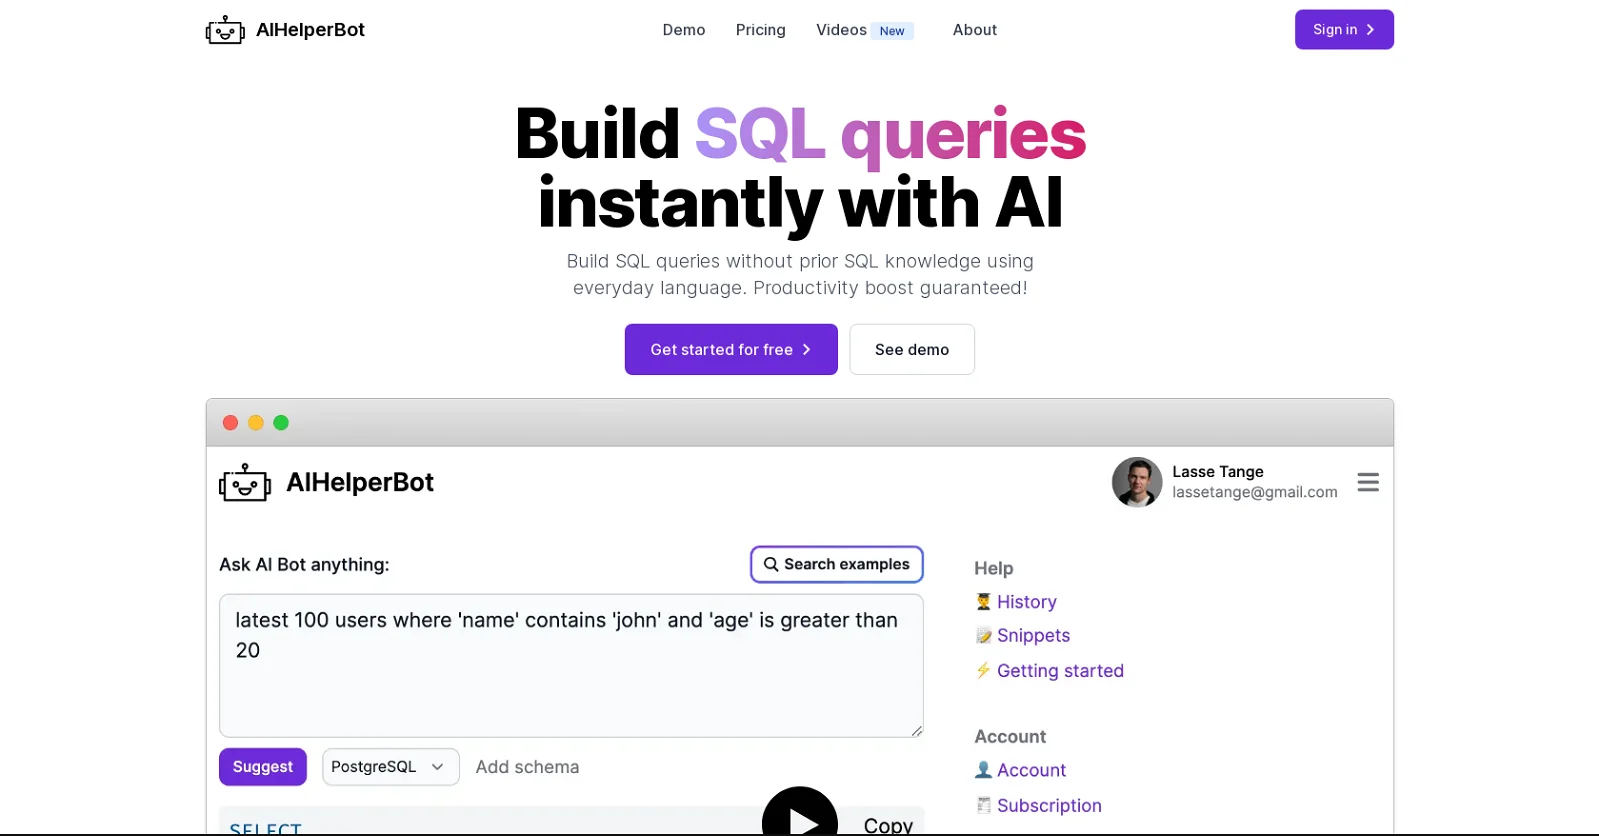 Homepage of the AI Helper Bot website